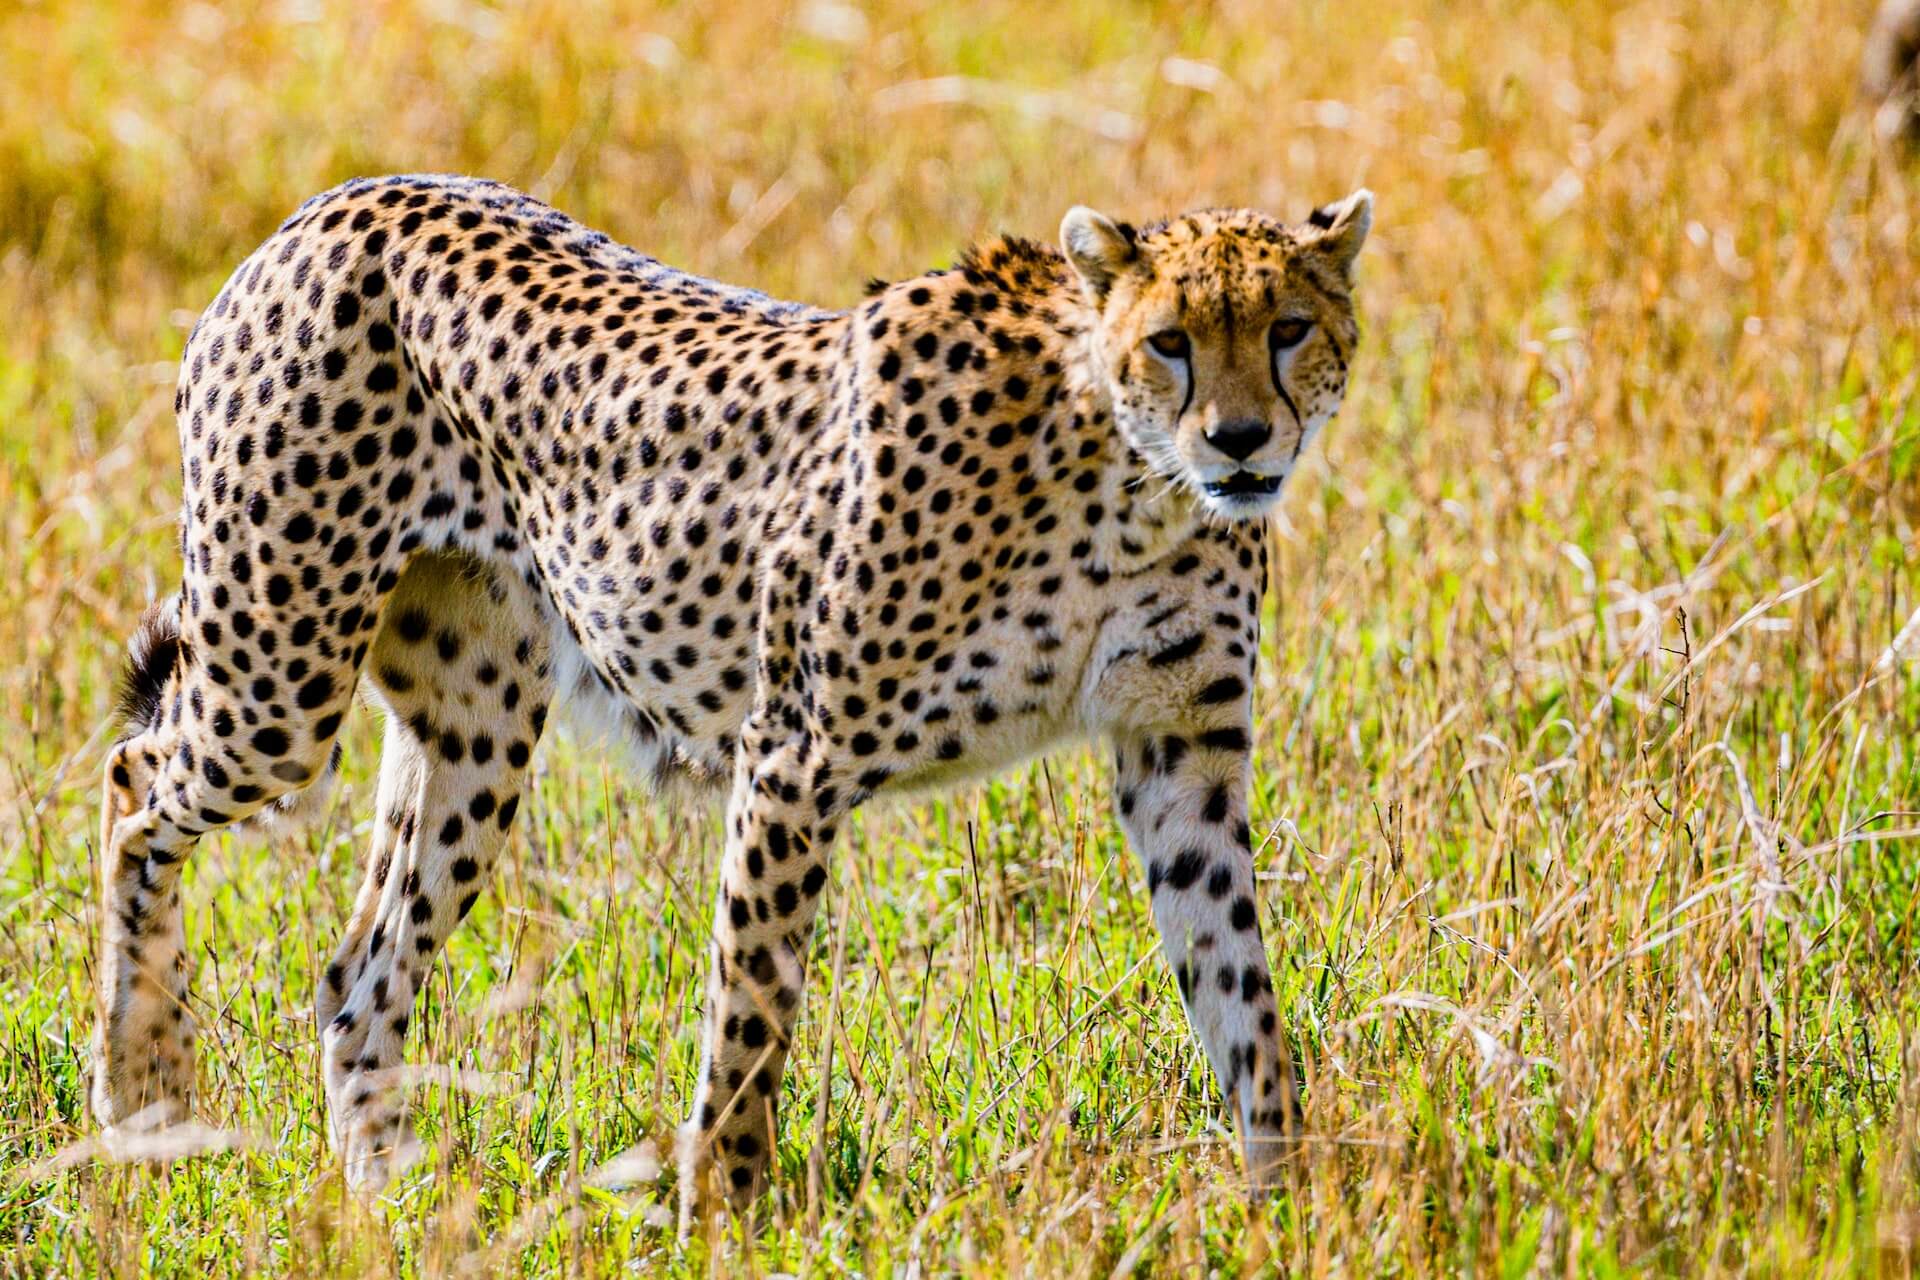 Kuno National Park for Cheetah